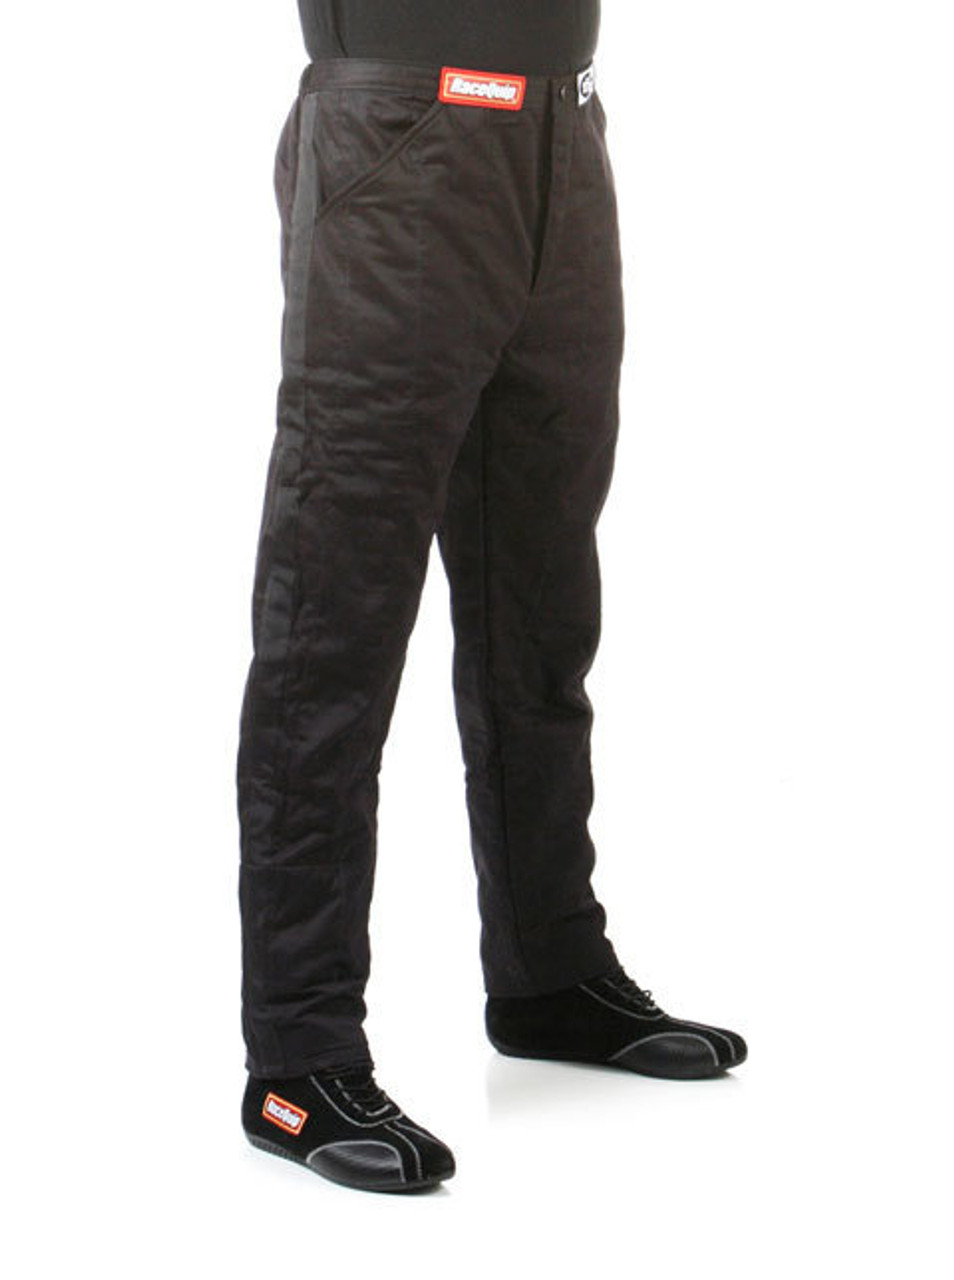 RaceQuip Black Pants Multi Layer 4X-Large